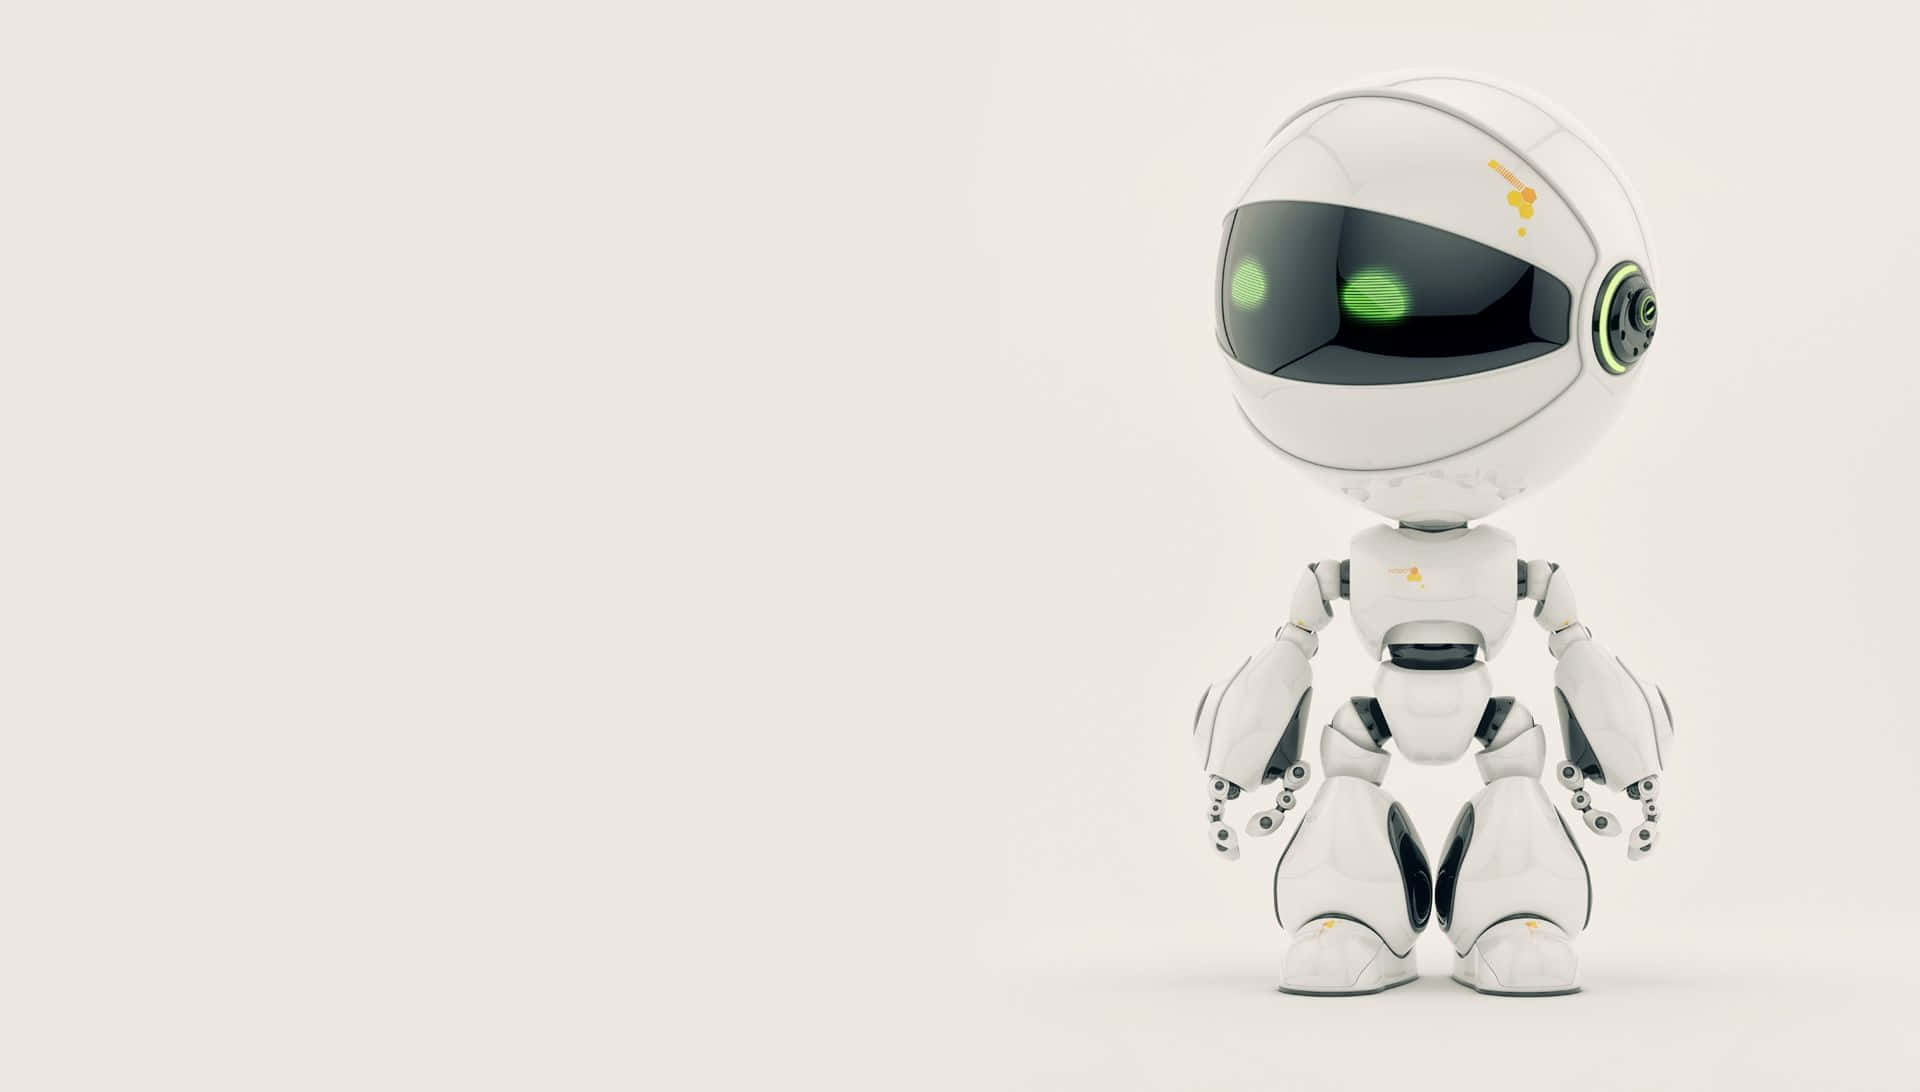 An imaginative humanoid robot dreams of exploring a bright and vibrant future